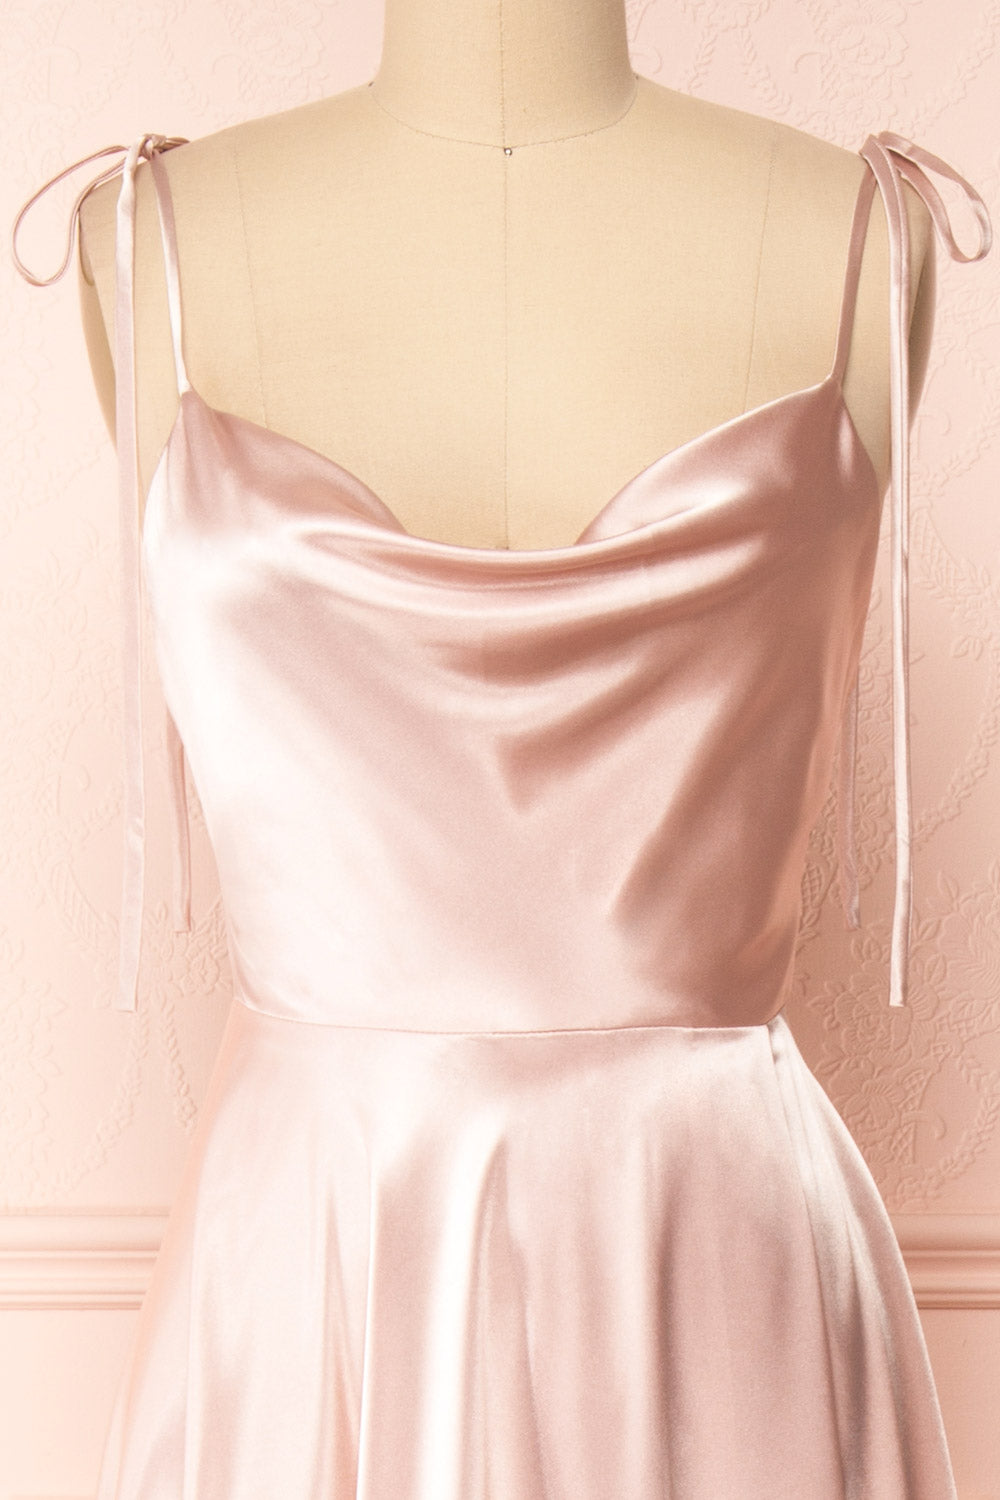 Moira Blush Cowl Neck Satin Maxi Dress w/ High Slit | Boutique 1861 front close-up